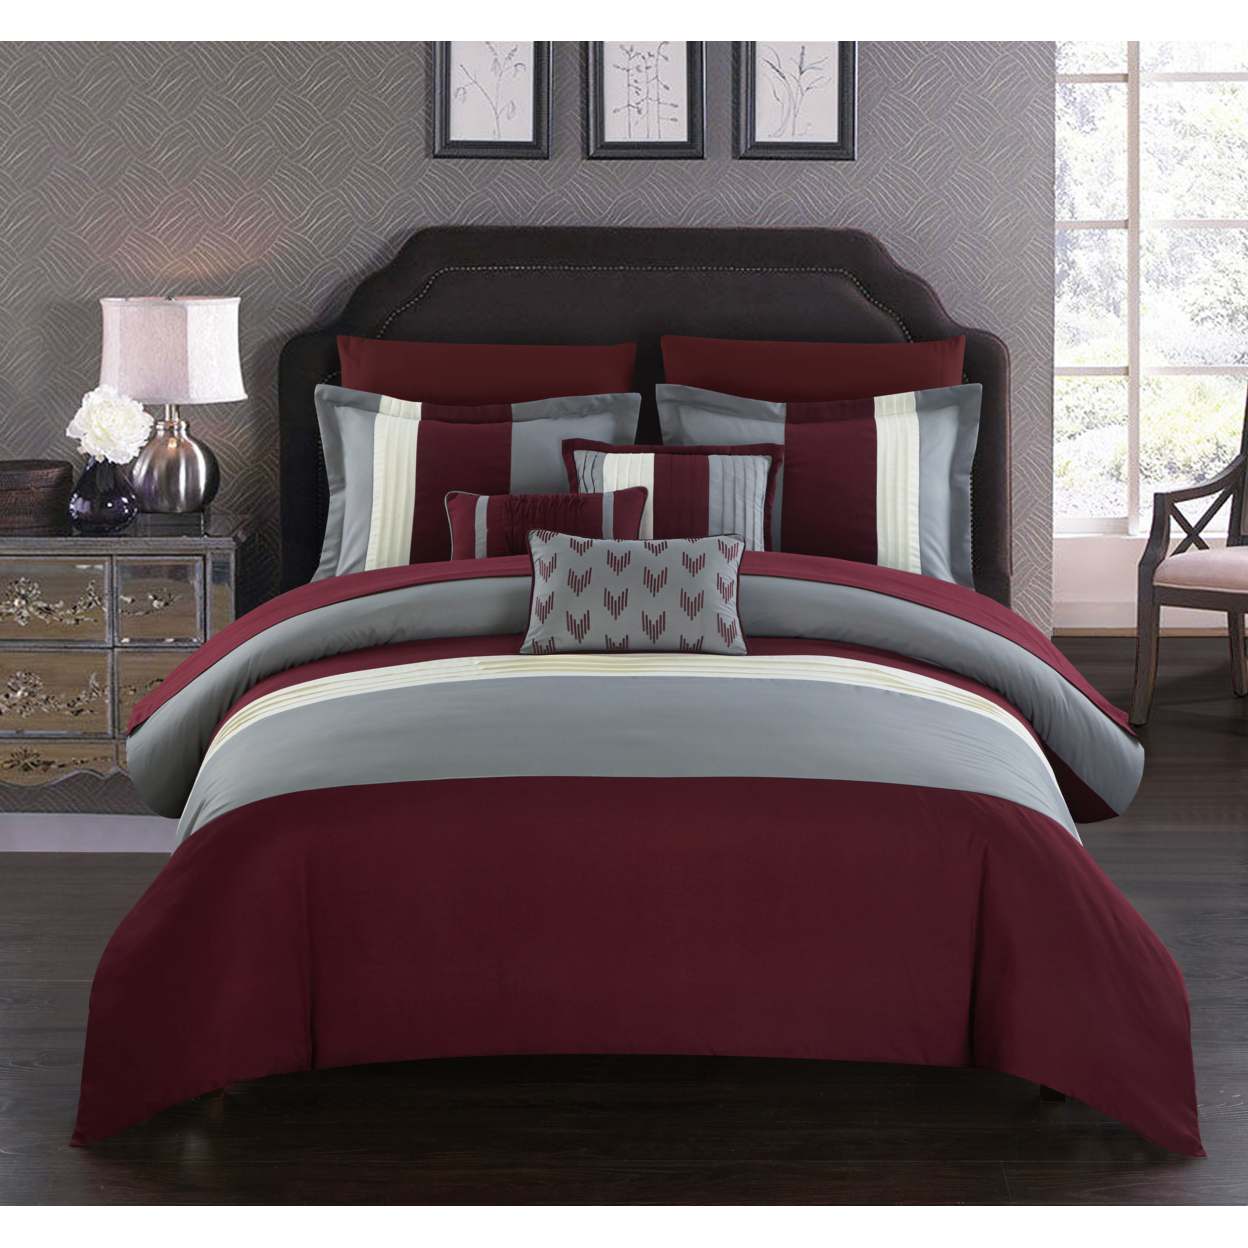 Rashi 10 Or 8 Piece Color Block Bed In A Bag Bedding And Comforter Set - Burgundy, King